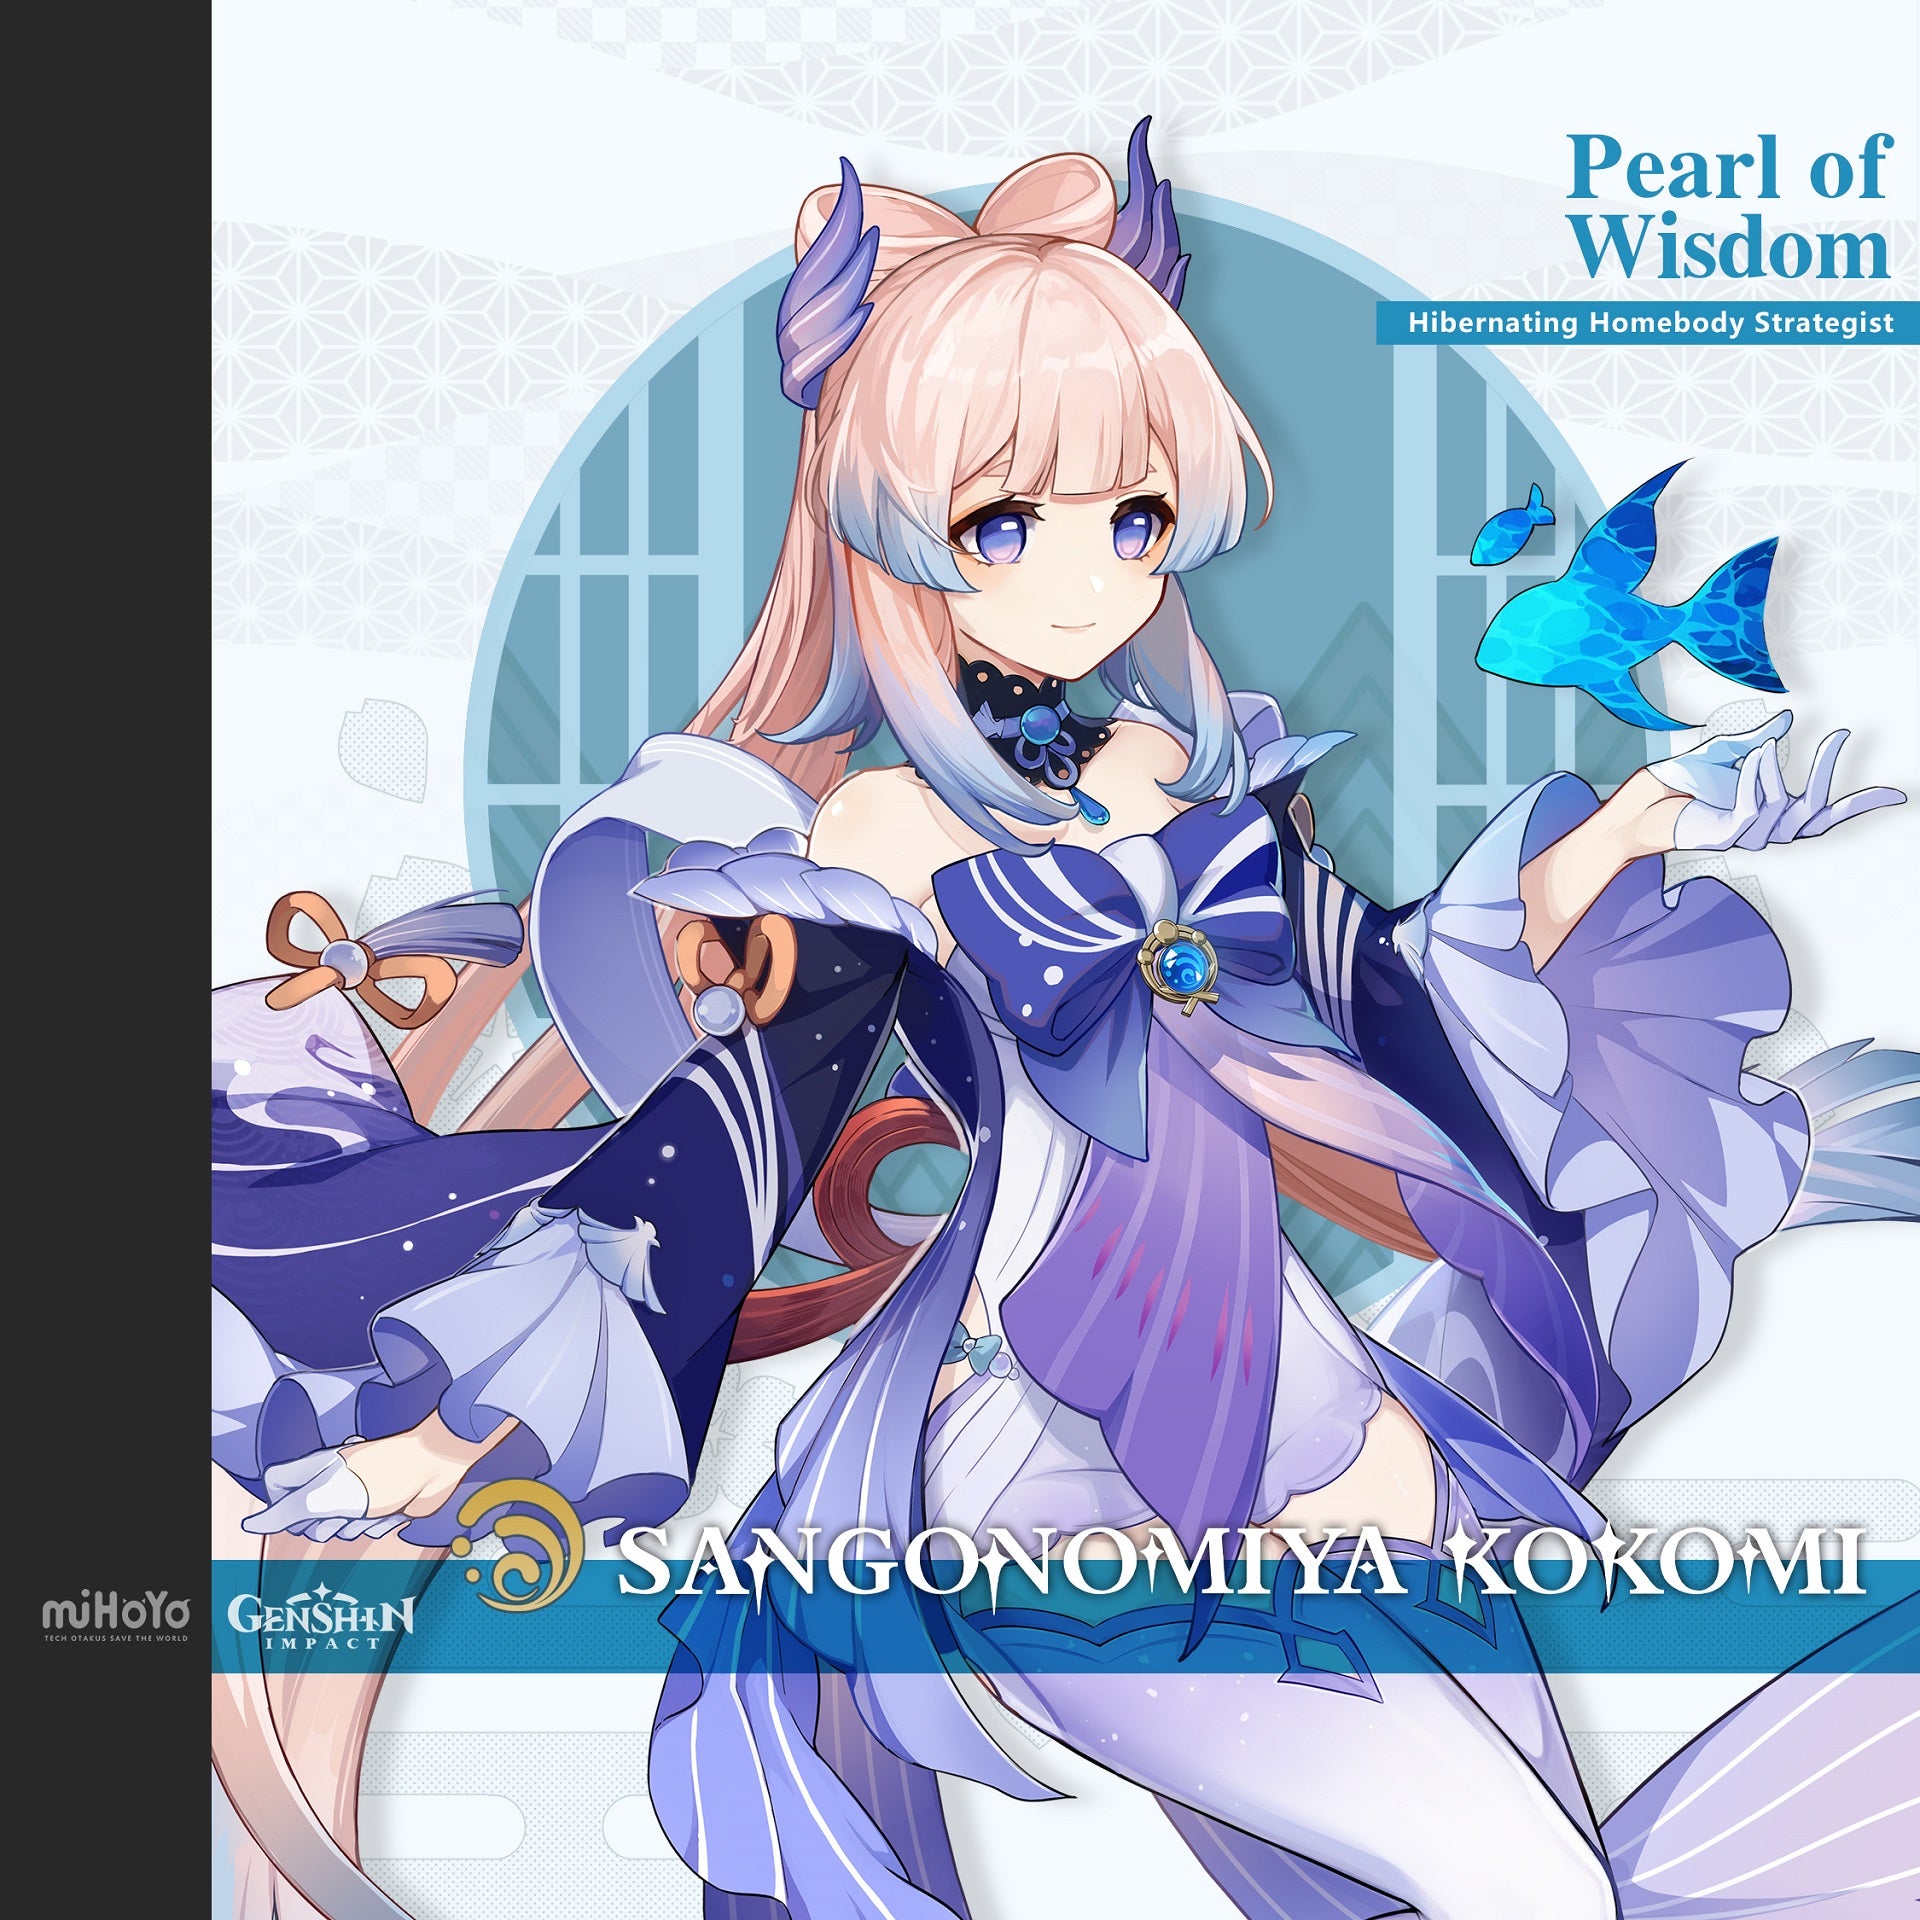 A profile image of Sangonomiya Kokomi, including her title "Pearl of Wisdom" and the description "Hibernating Homebody Strategist".